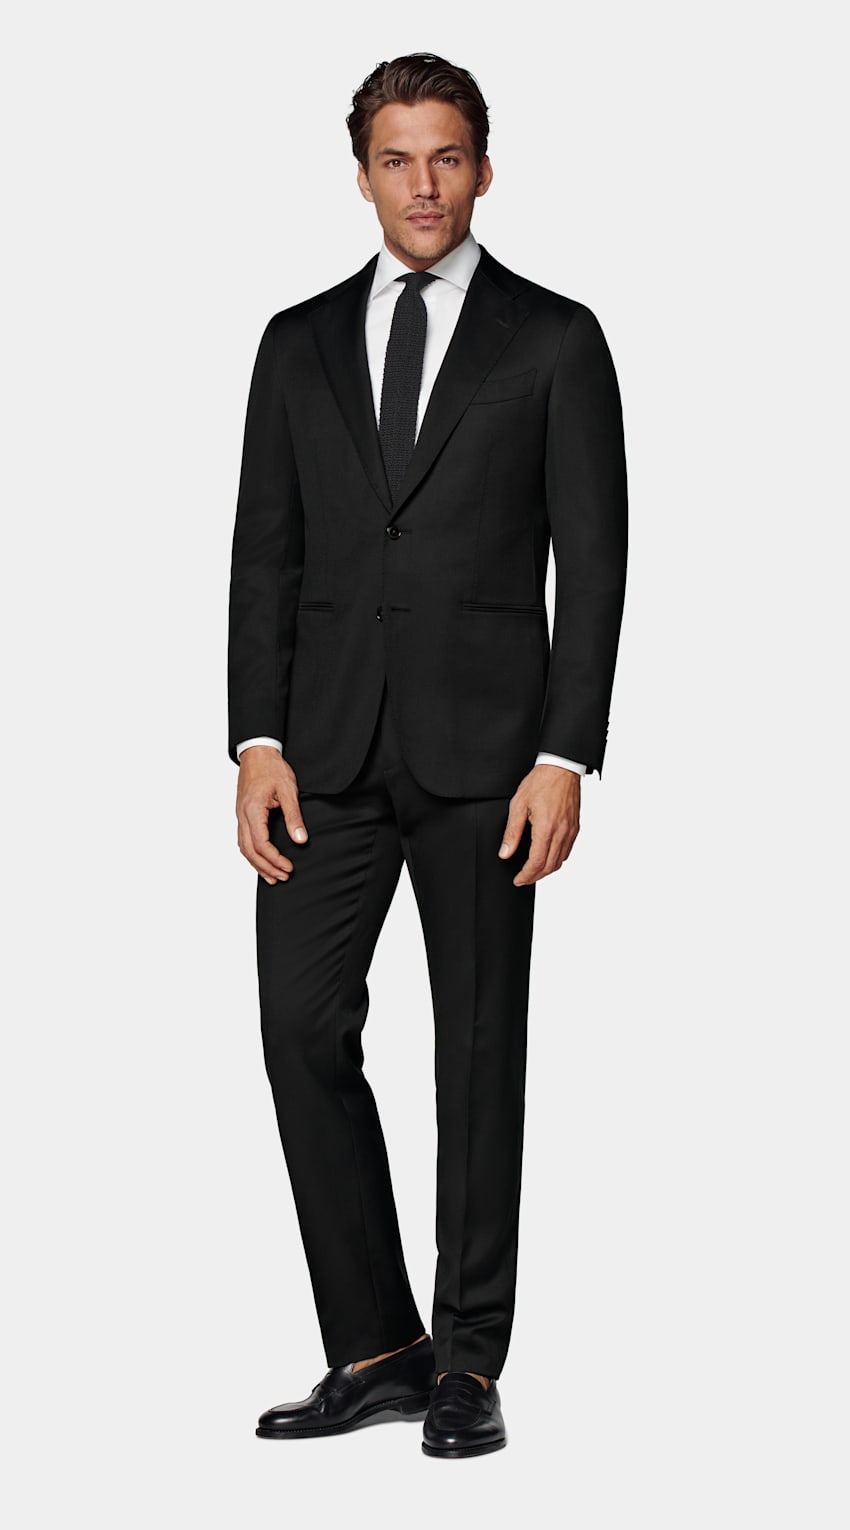 SUITSUPPLY Pura lana S110s de Reda, Italia Traje Perennial Havana negro corte Tailored